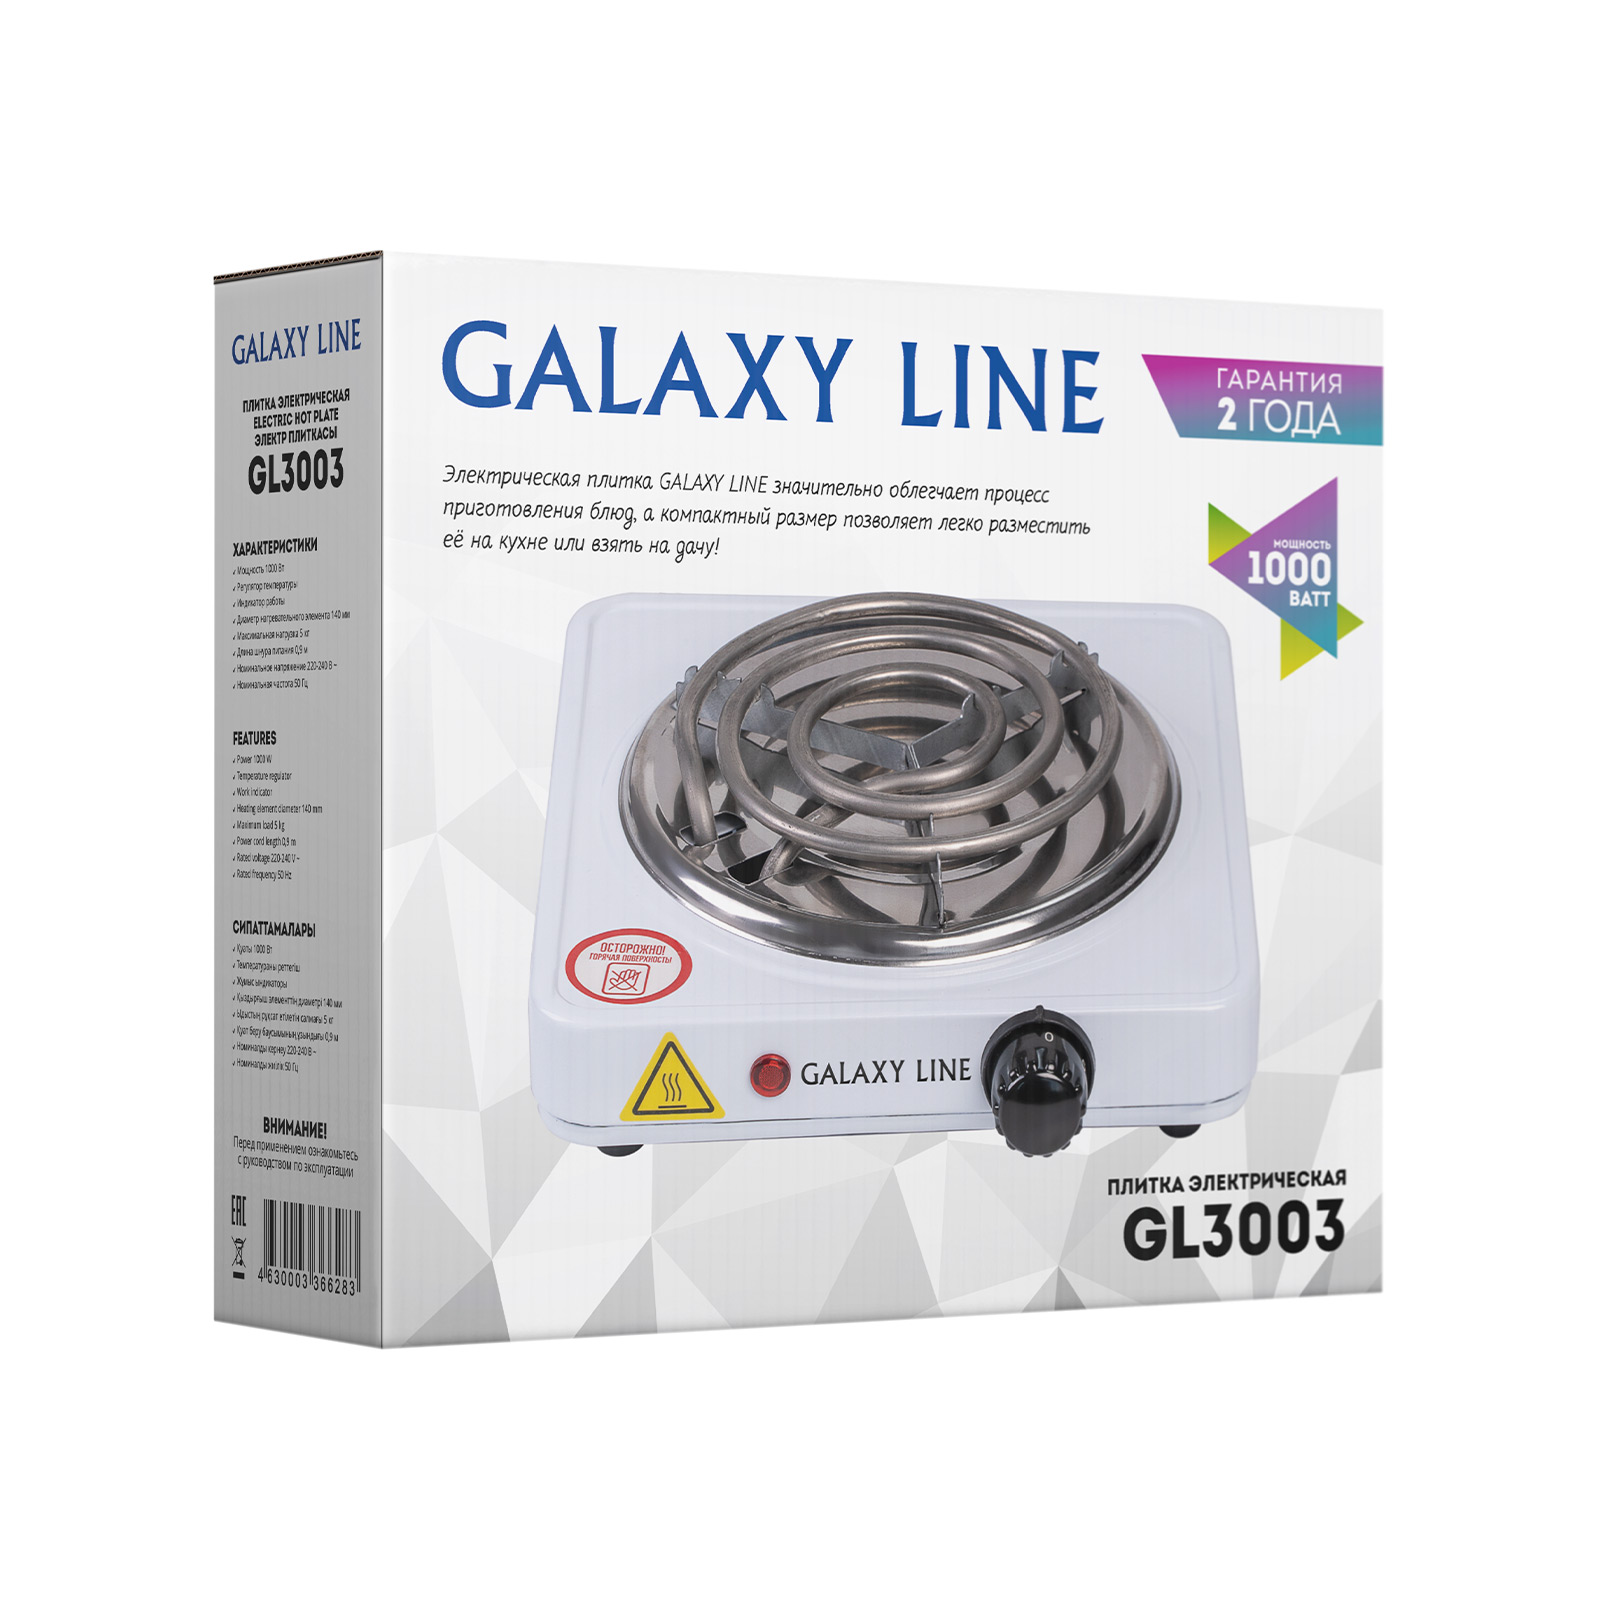   Galaxy Line GL3003